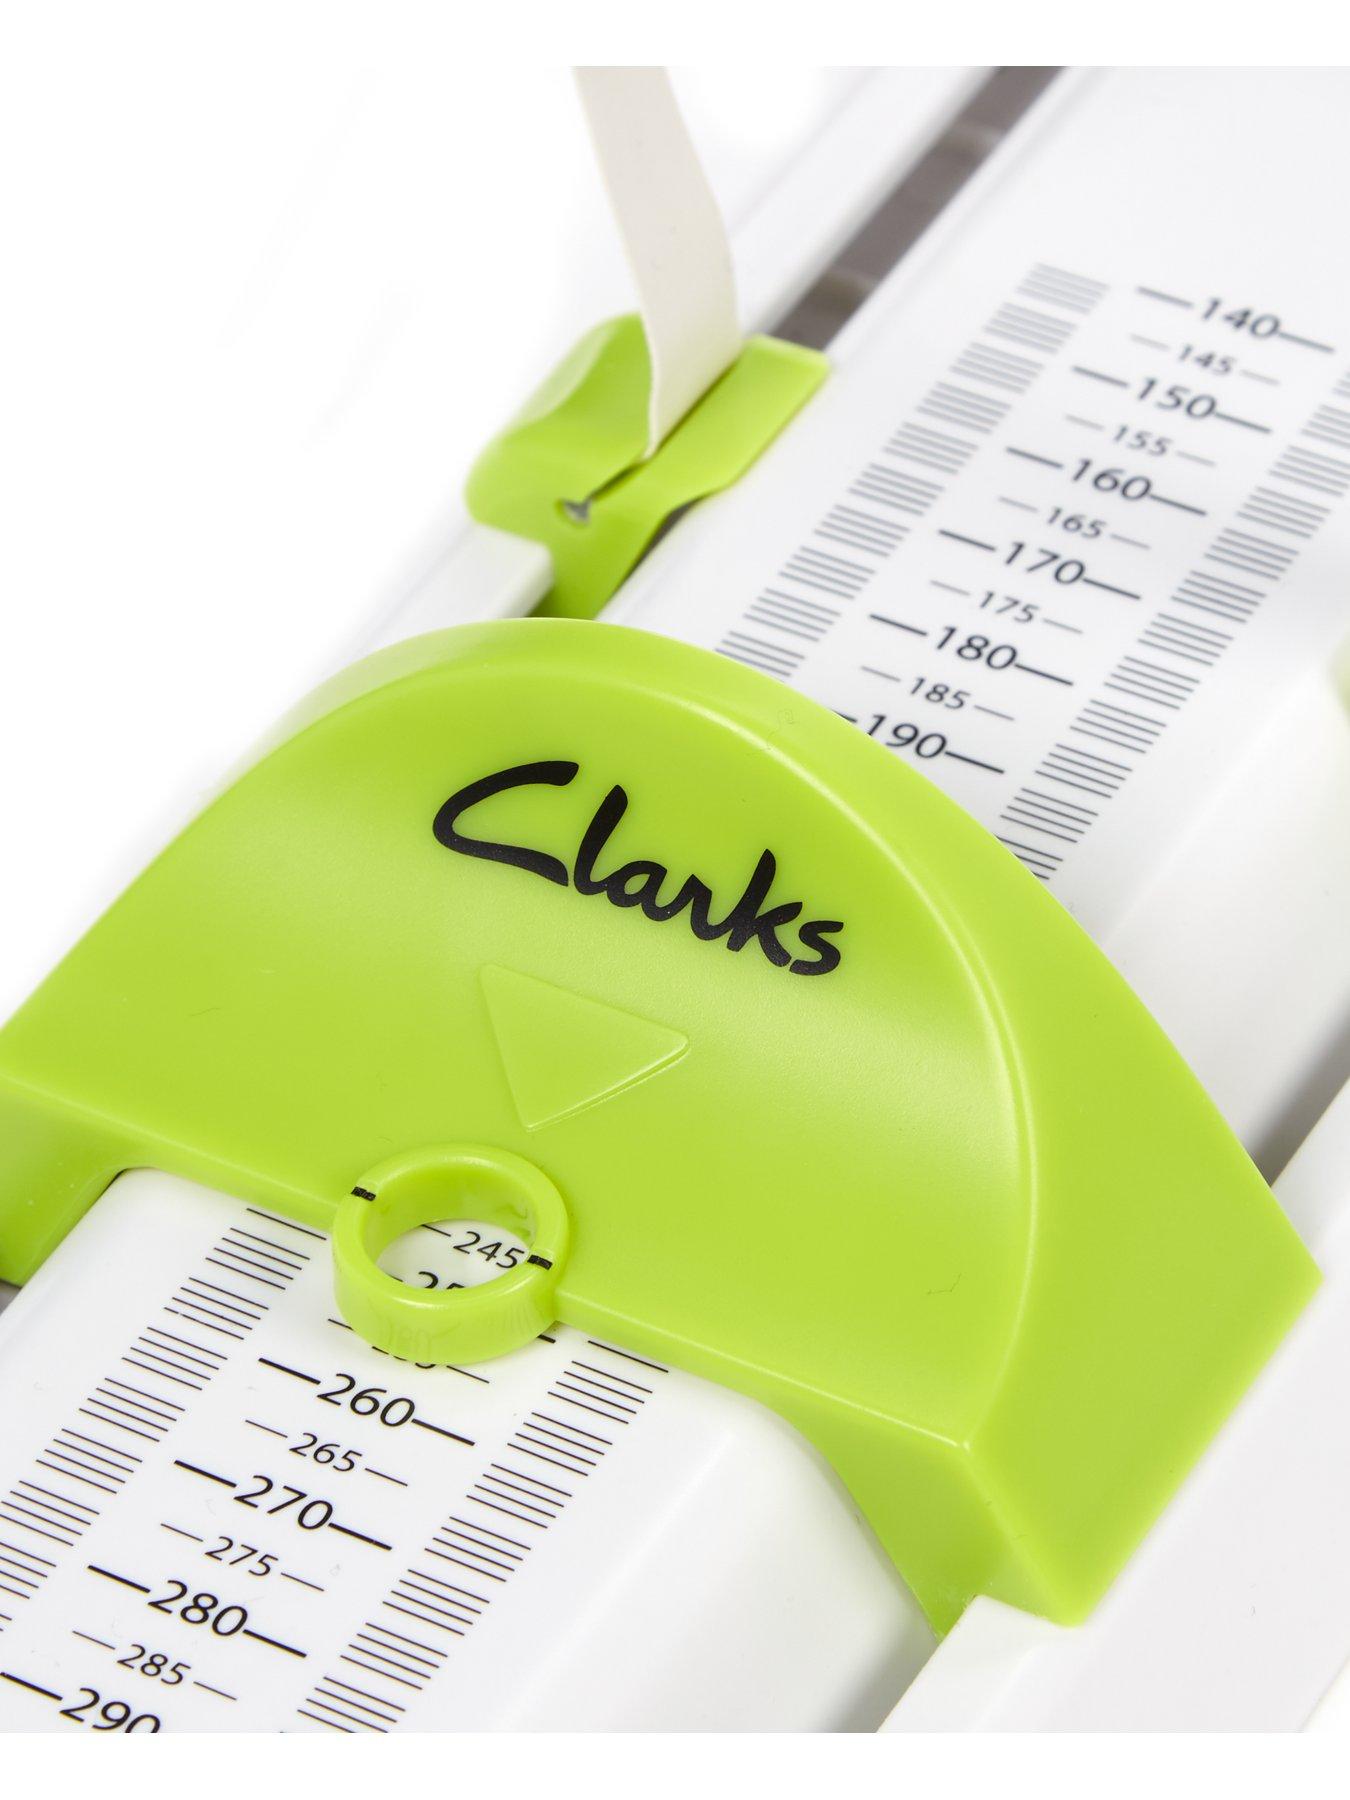 clarks junior foot measure